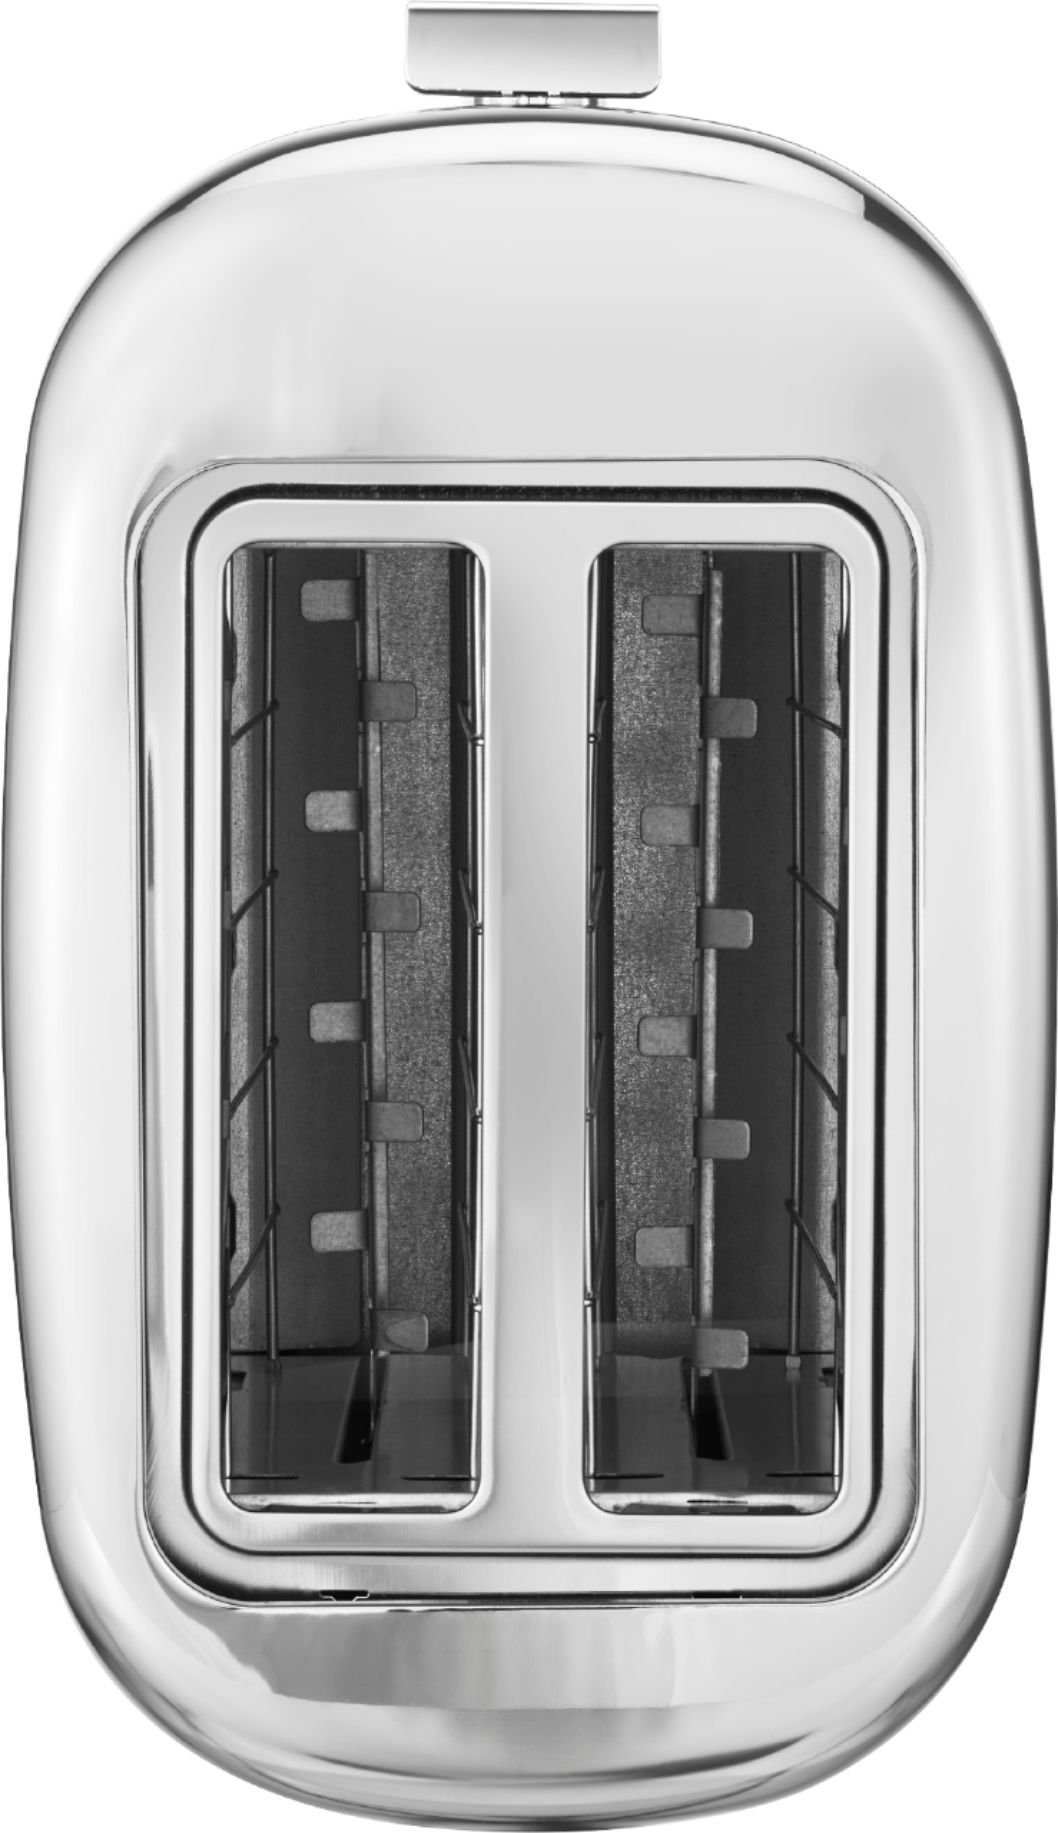 Bella Linea Extra Wide Toaster » Gadget Flow